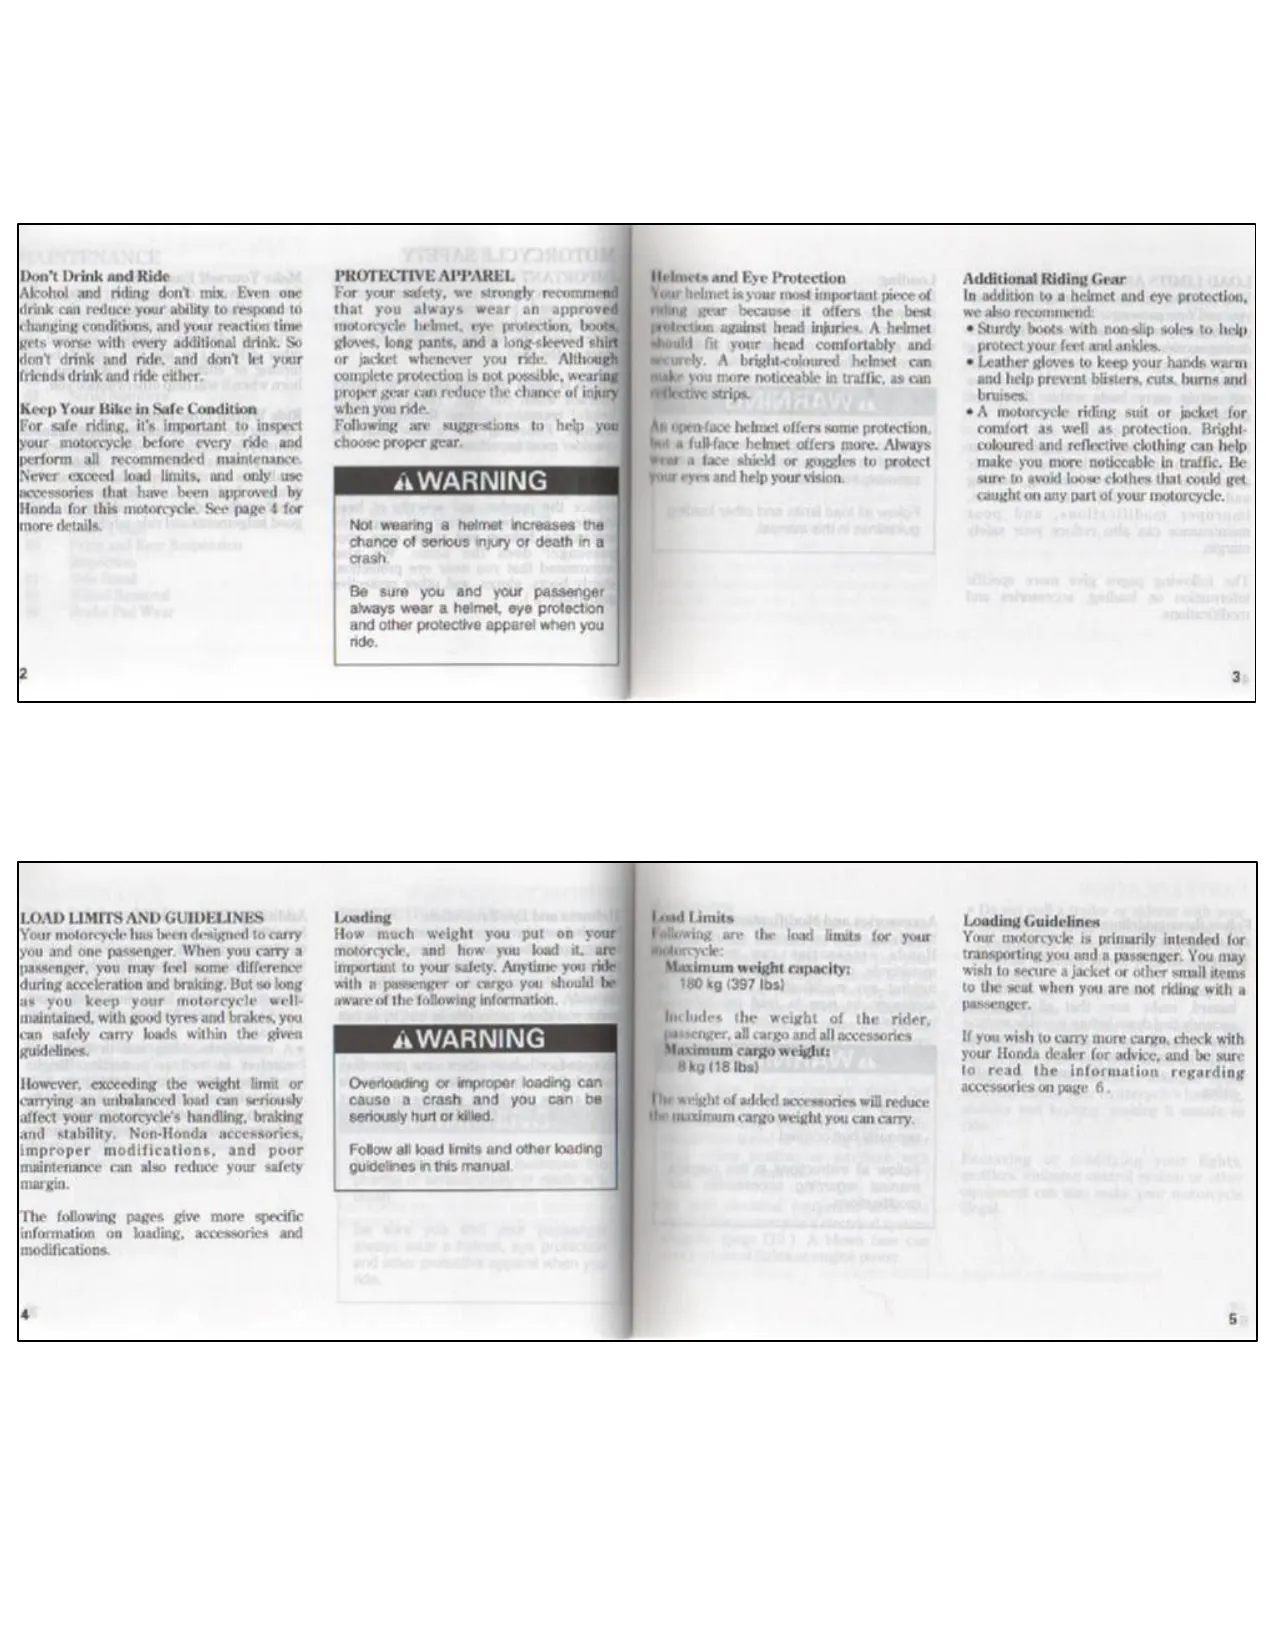 Honda CBR125R service manual Preview image 5